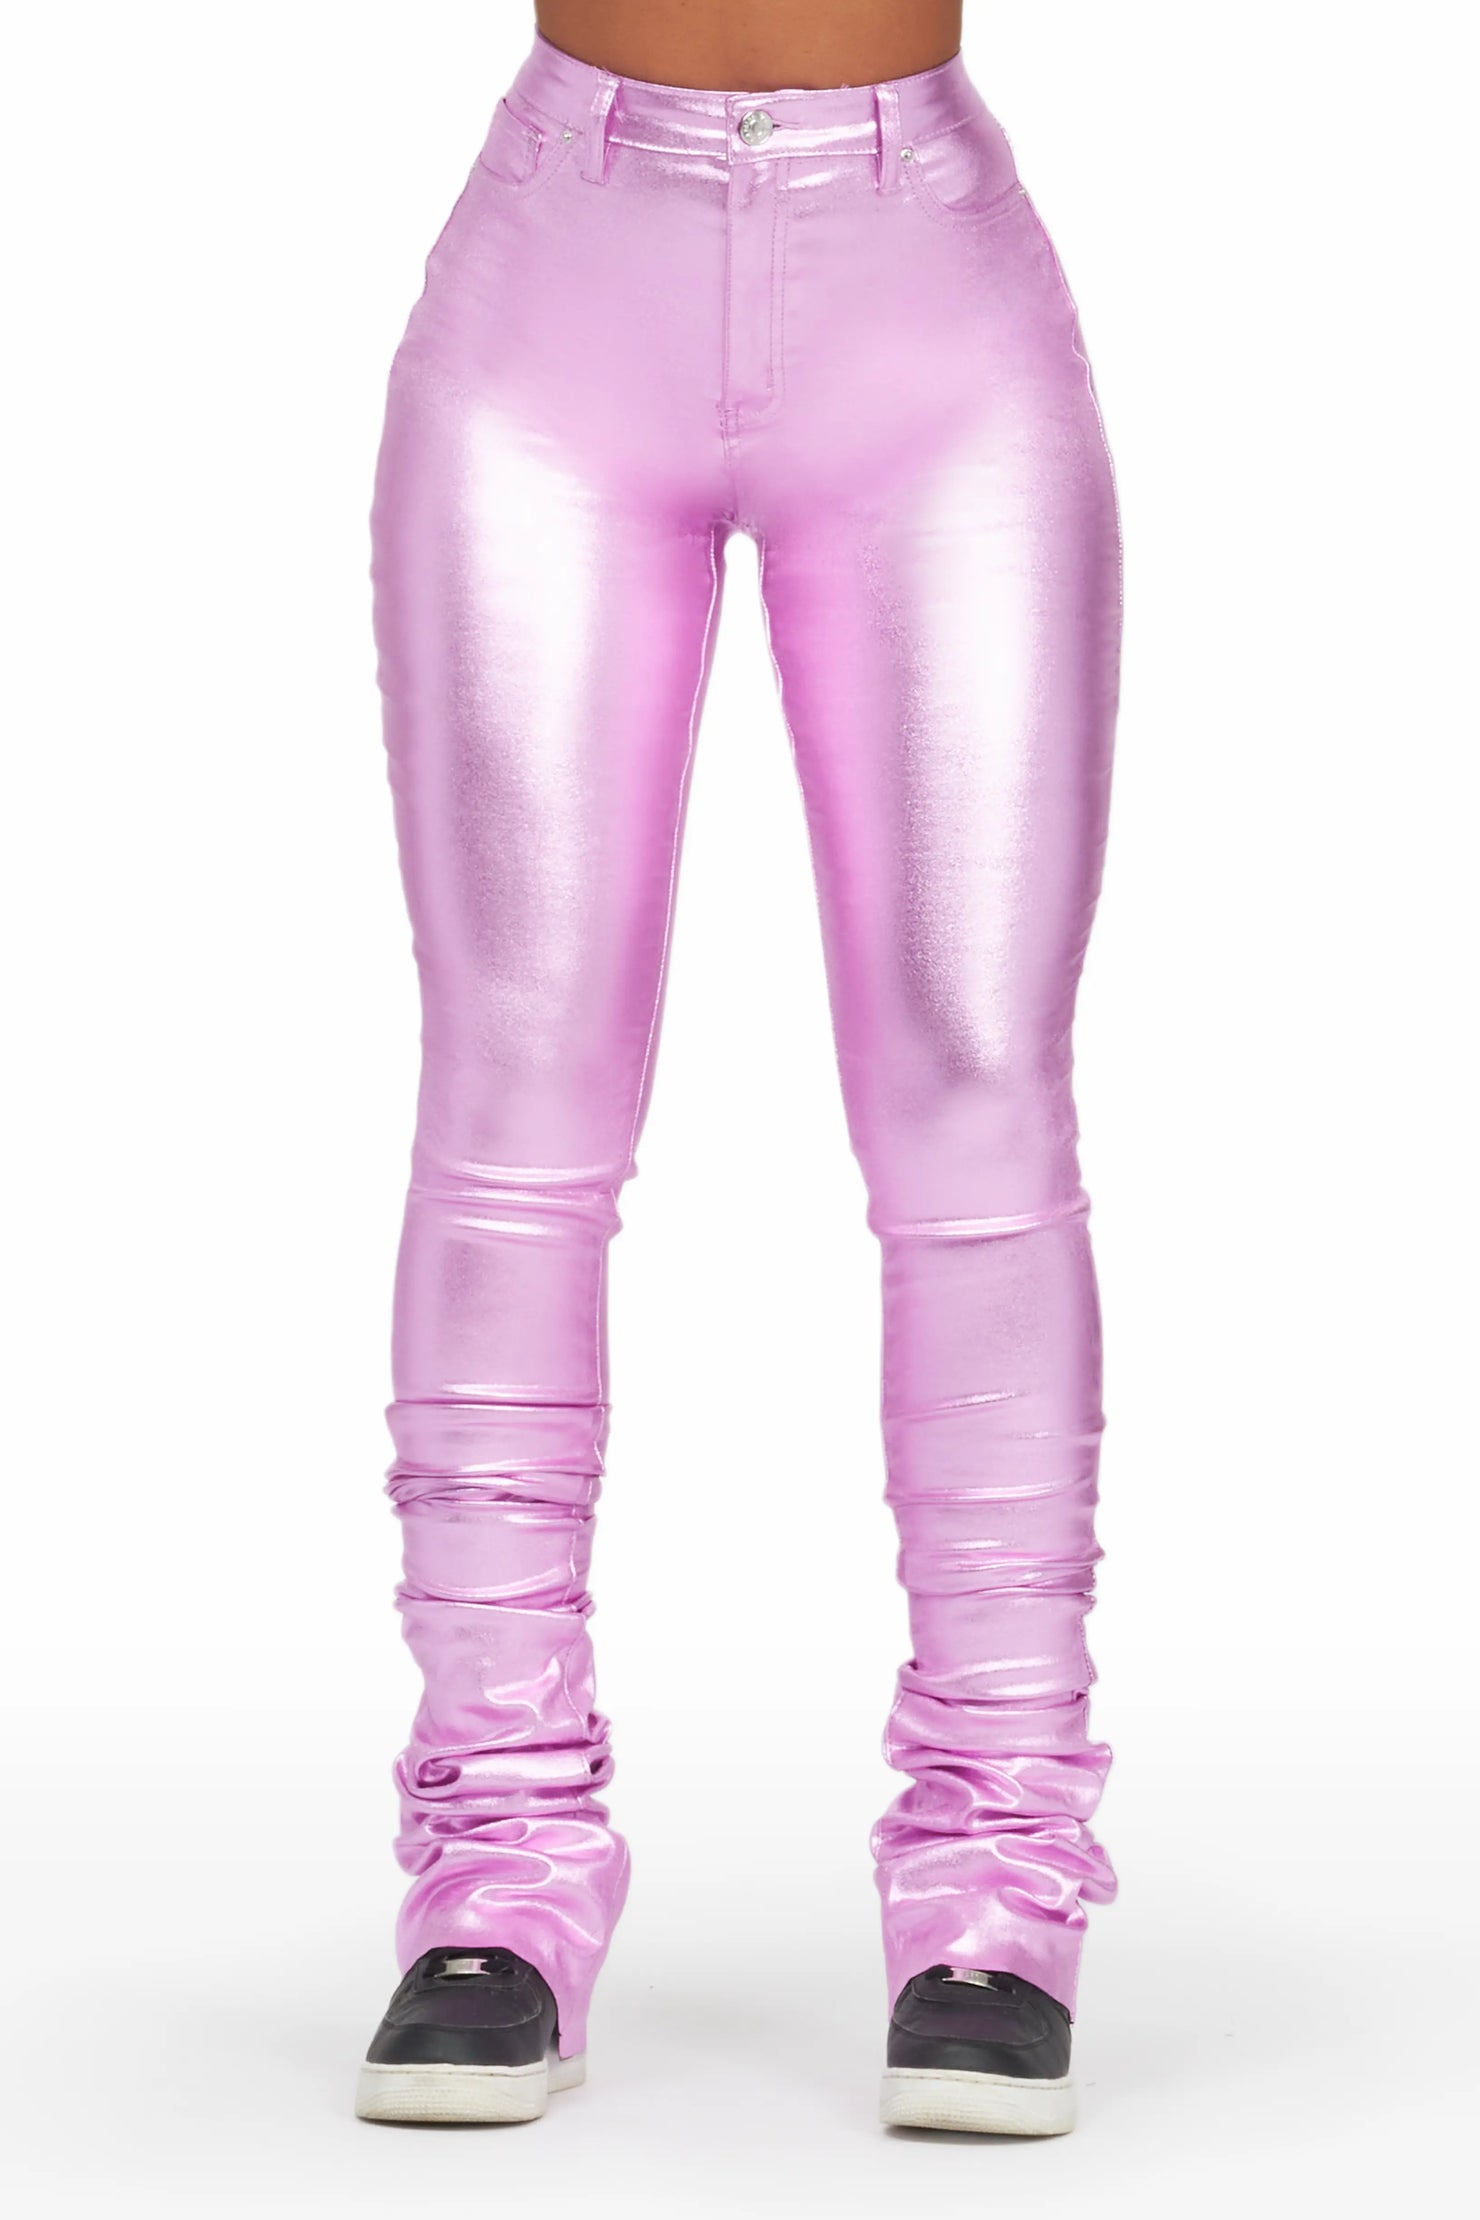 Keyonna Metallic Purple PU Super Stacked Pant